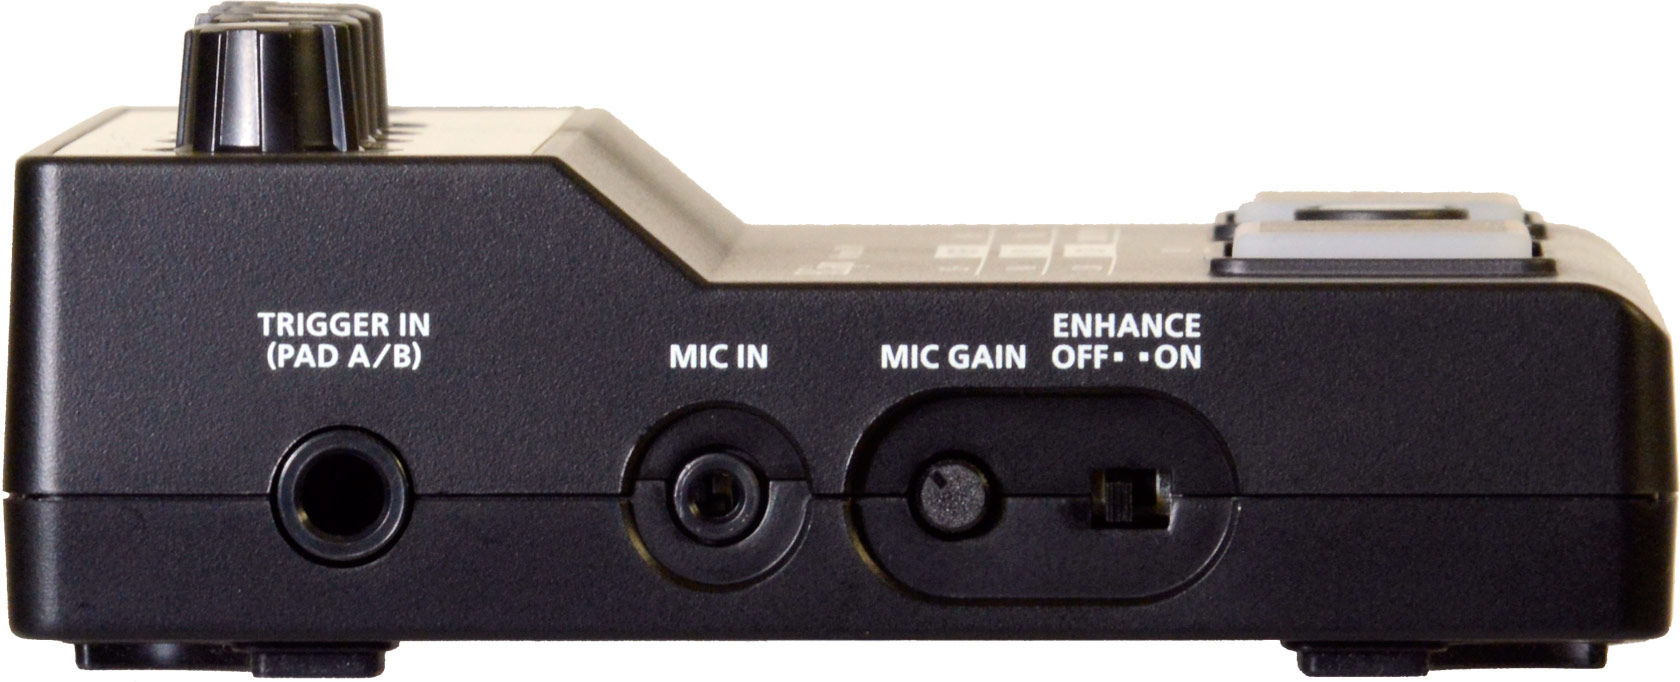 Roland EC-10M Cajon Module